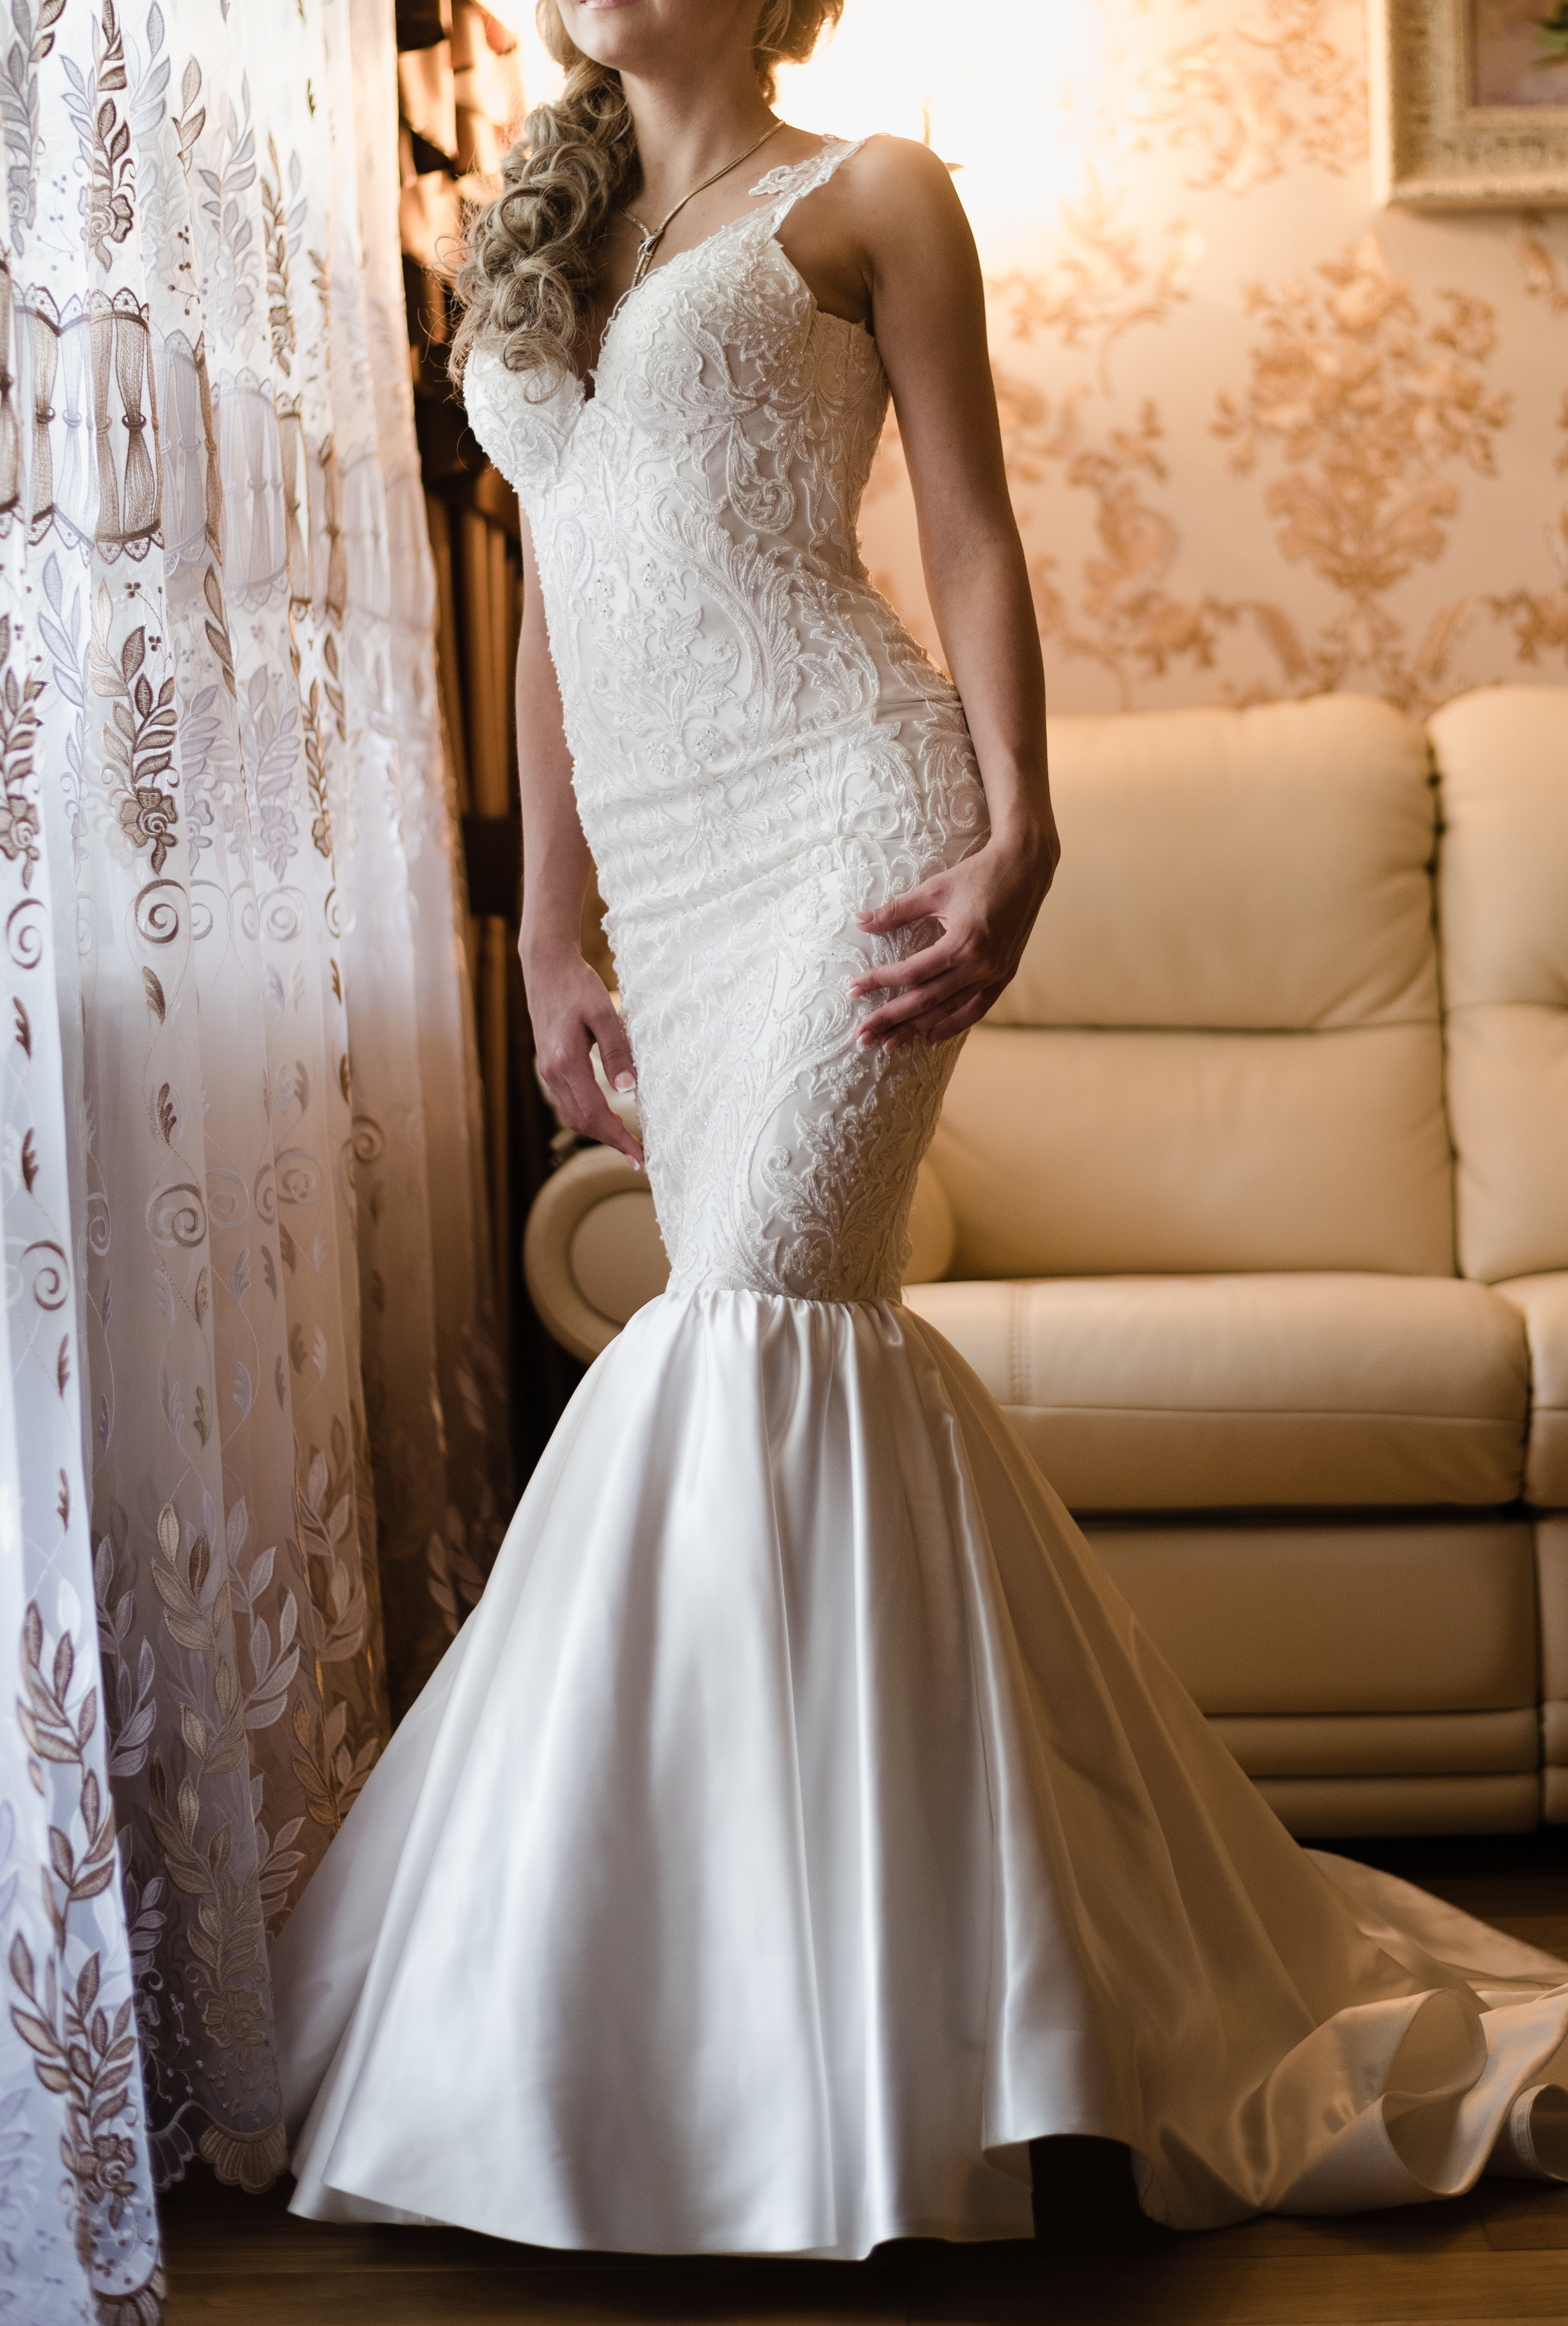 A woman in a wedding dress | Source: Shutterstock